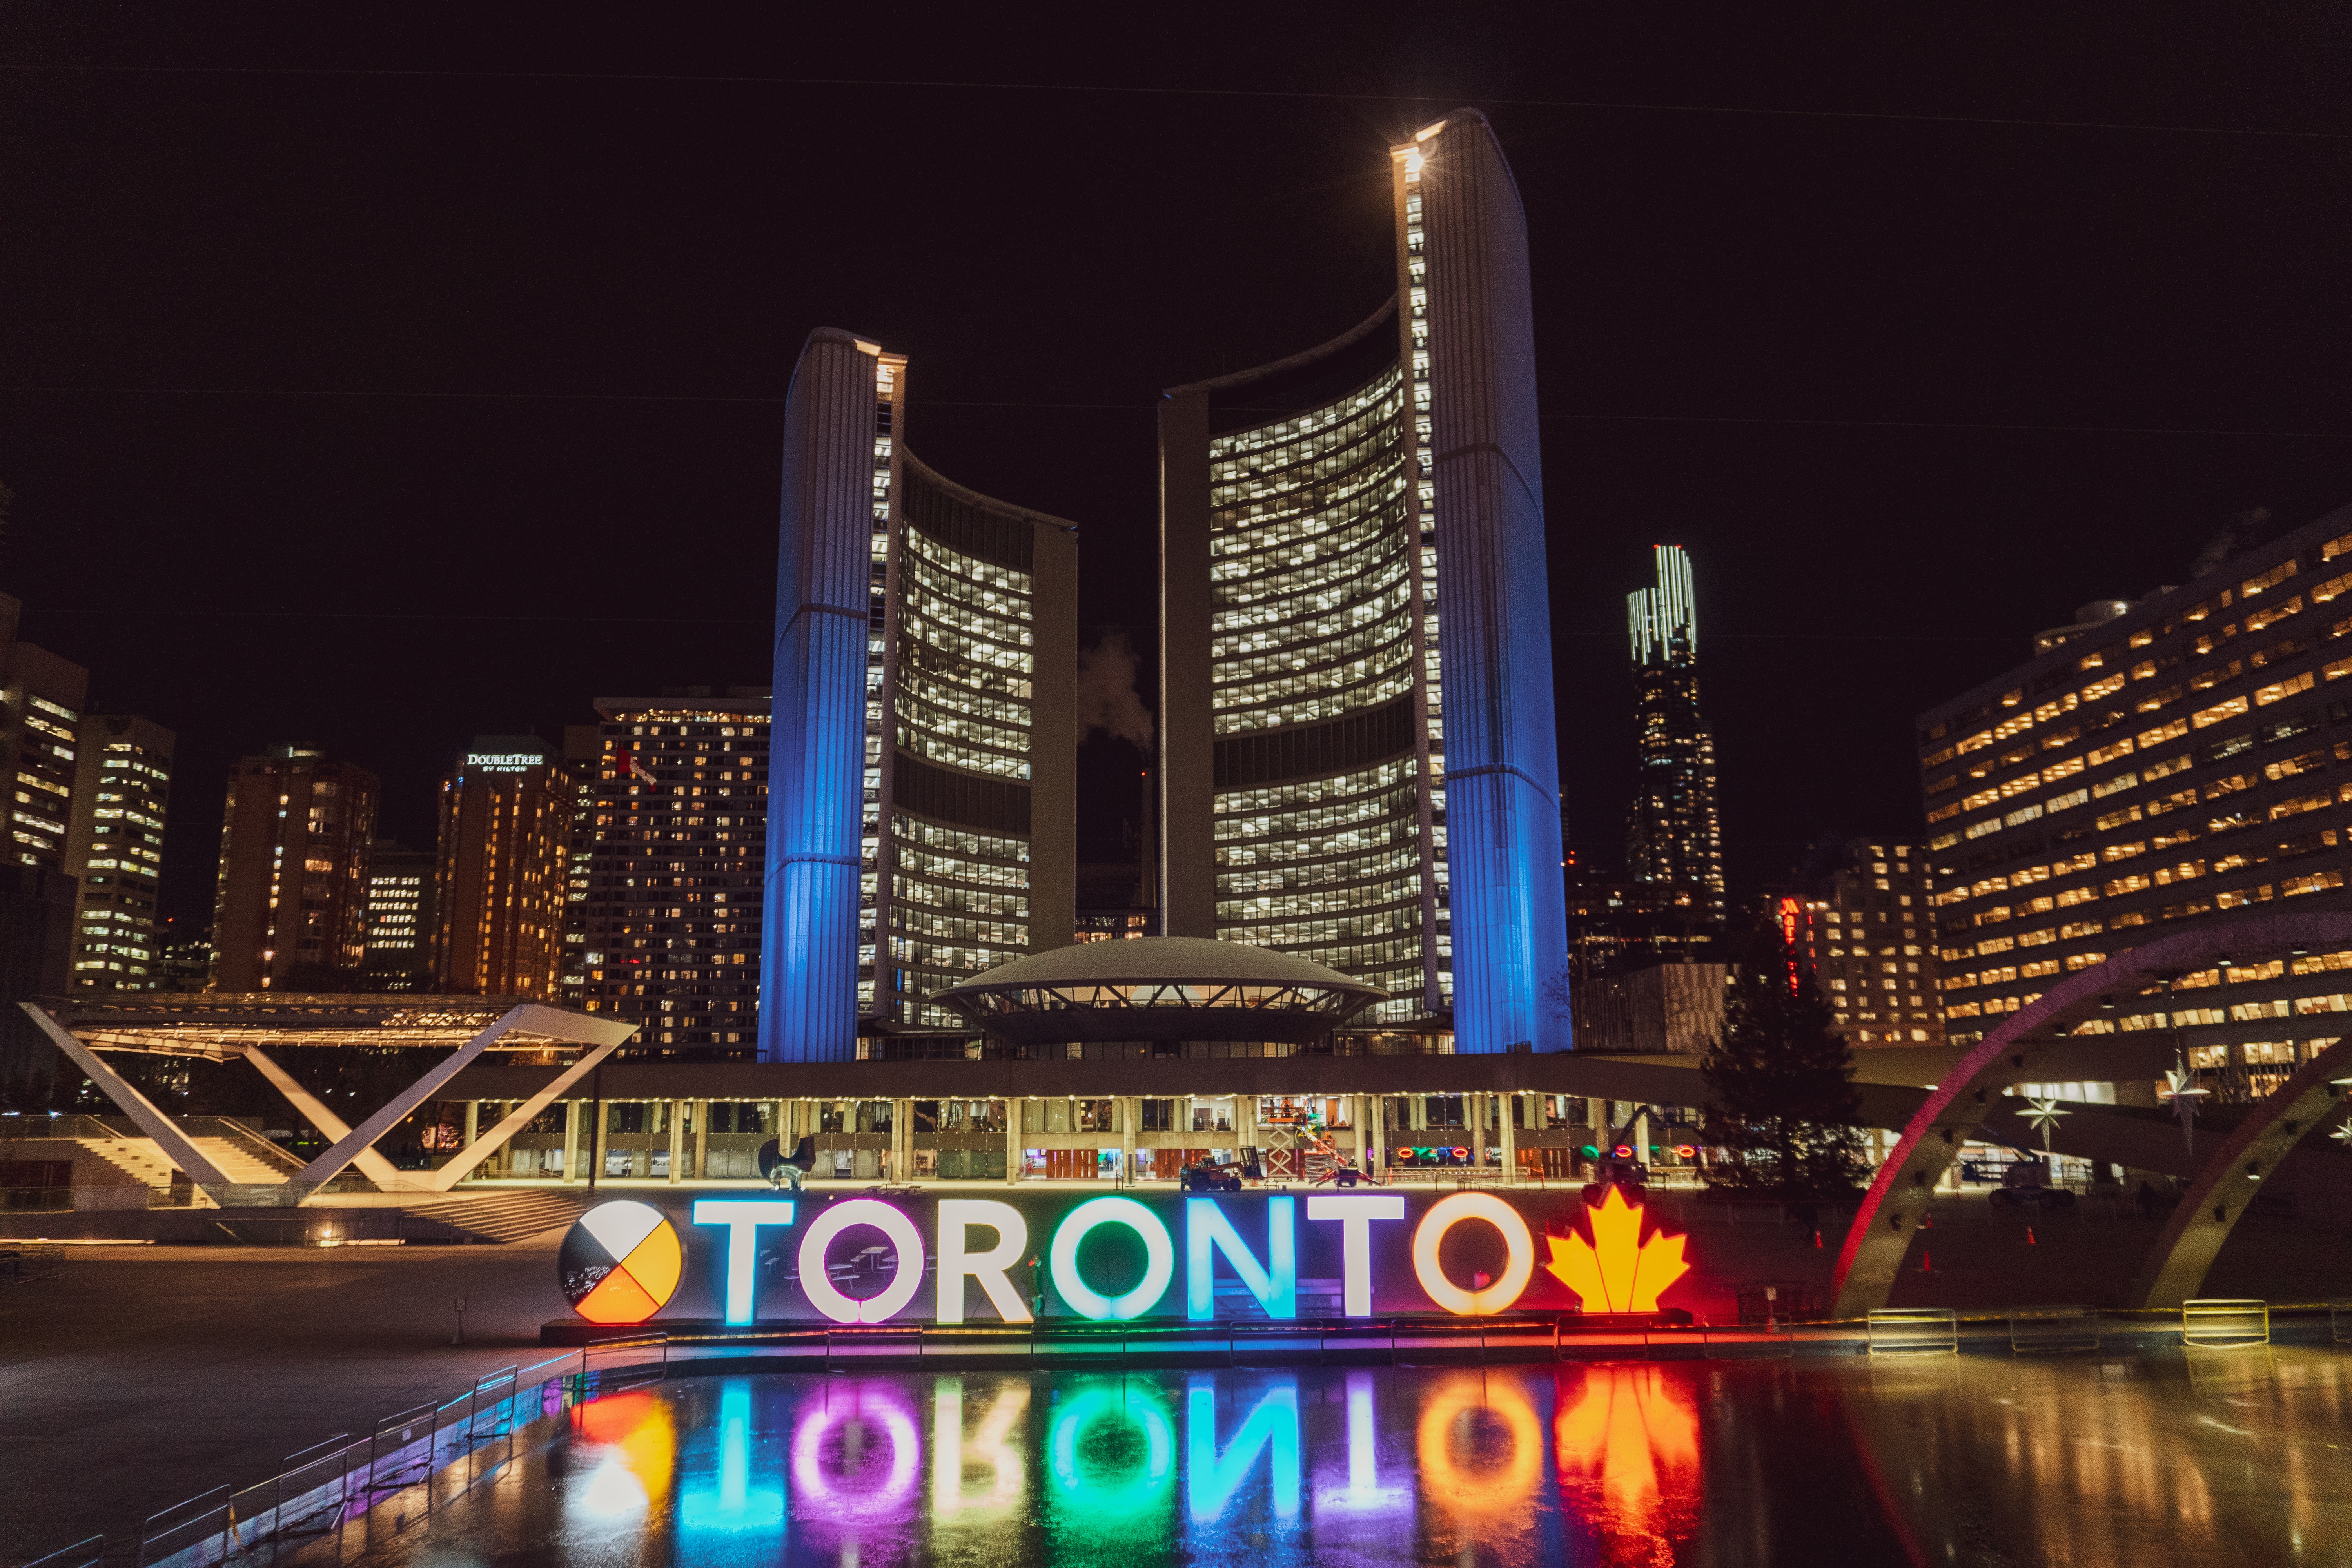 The Toronto Lights